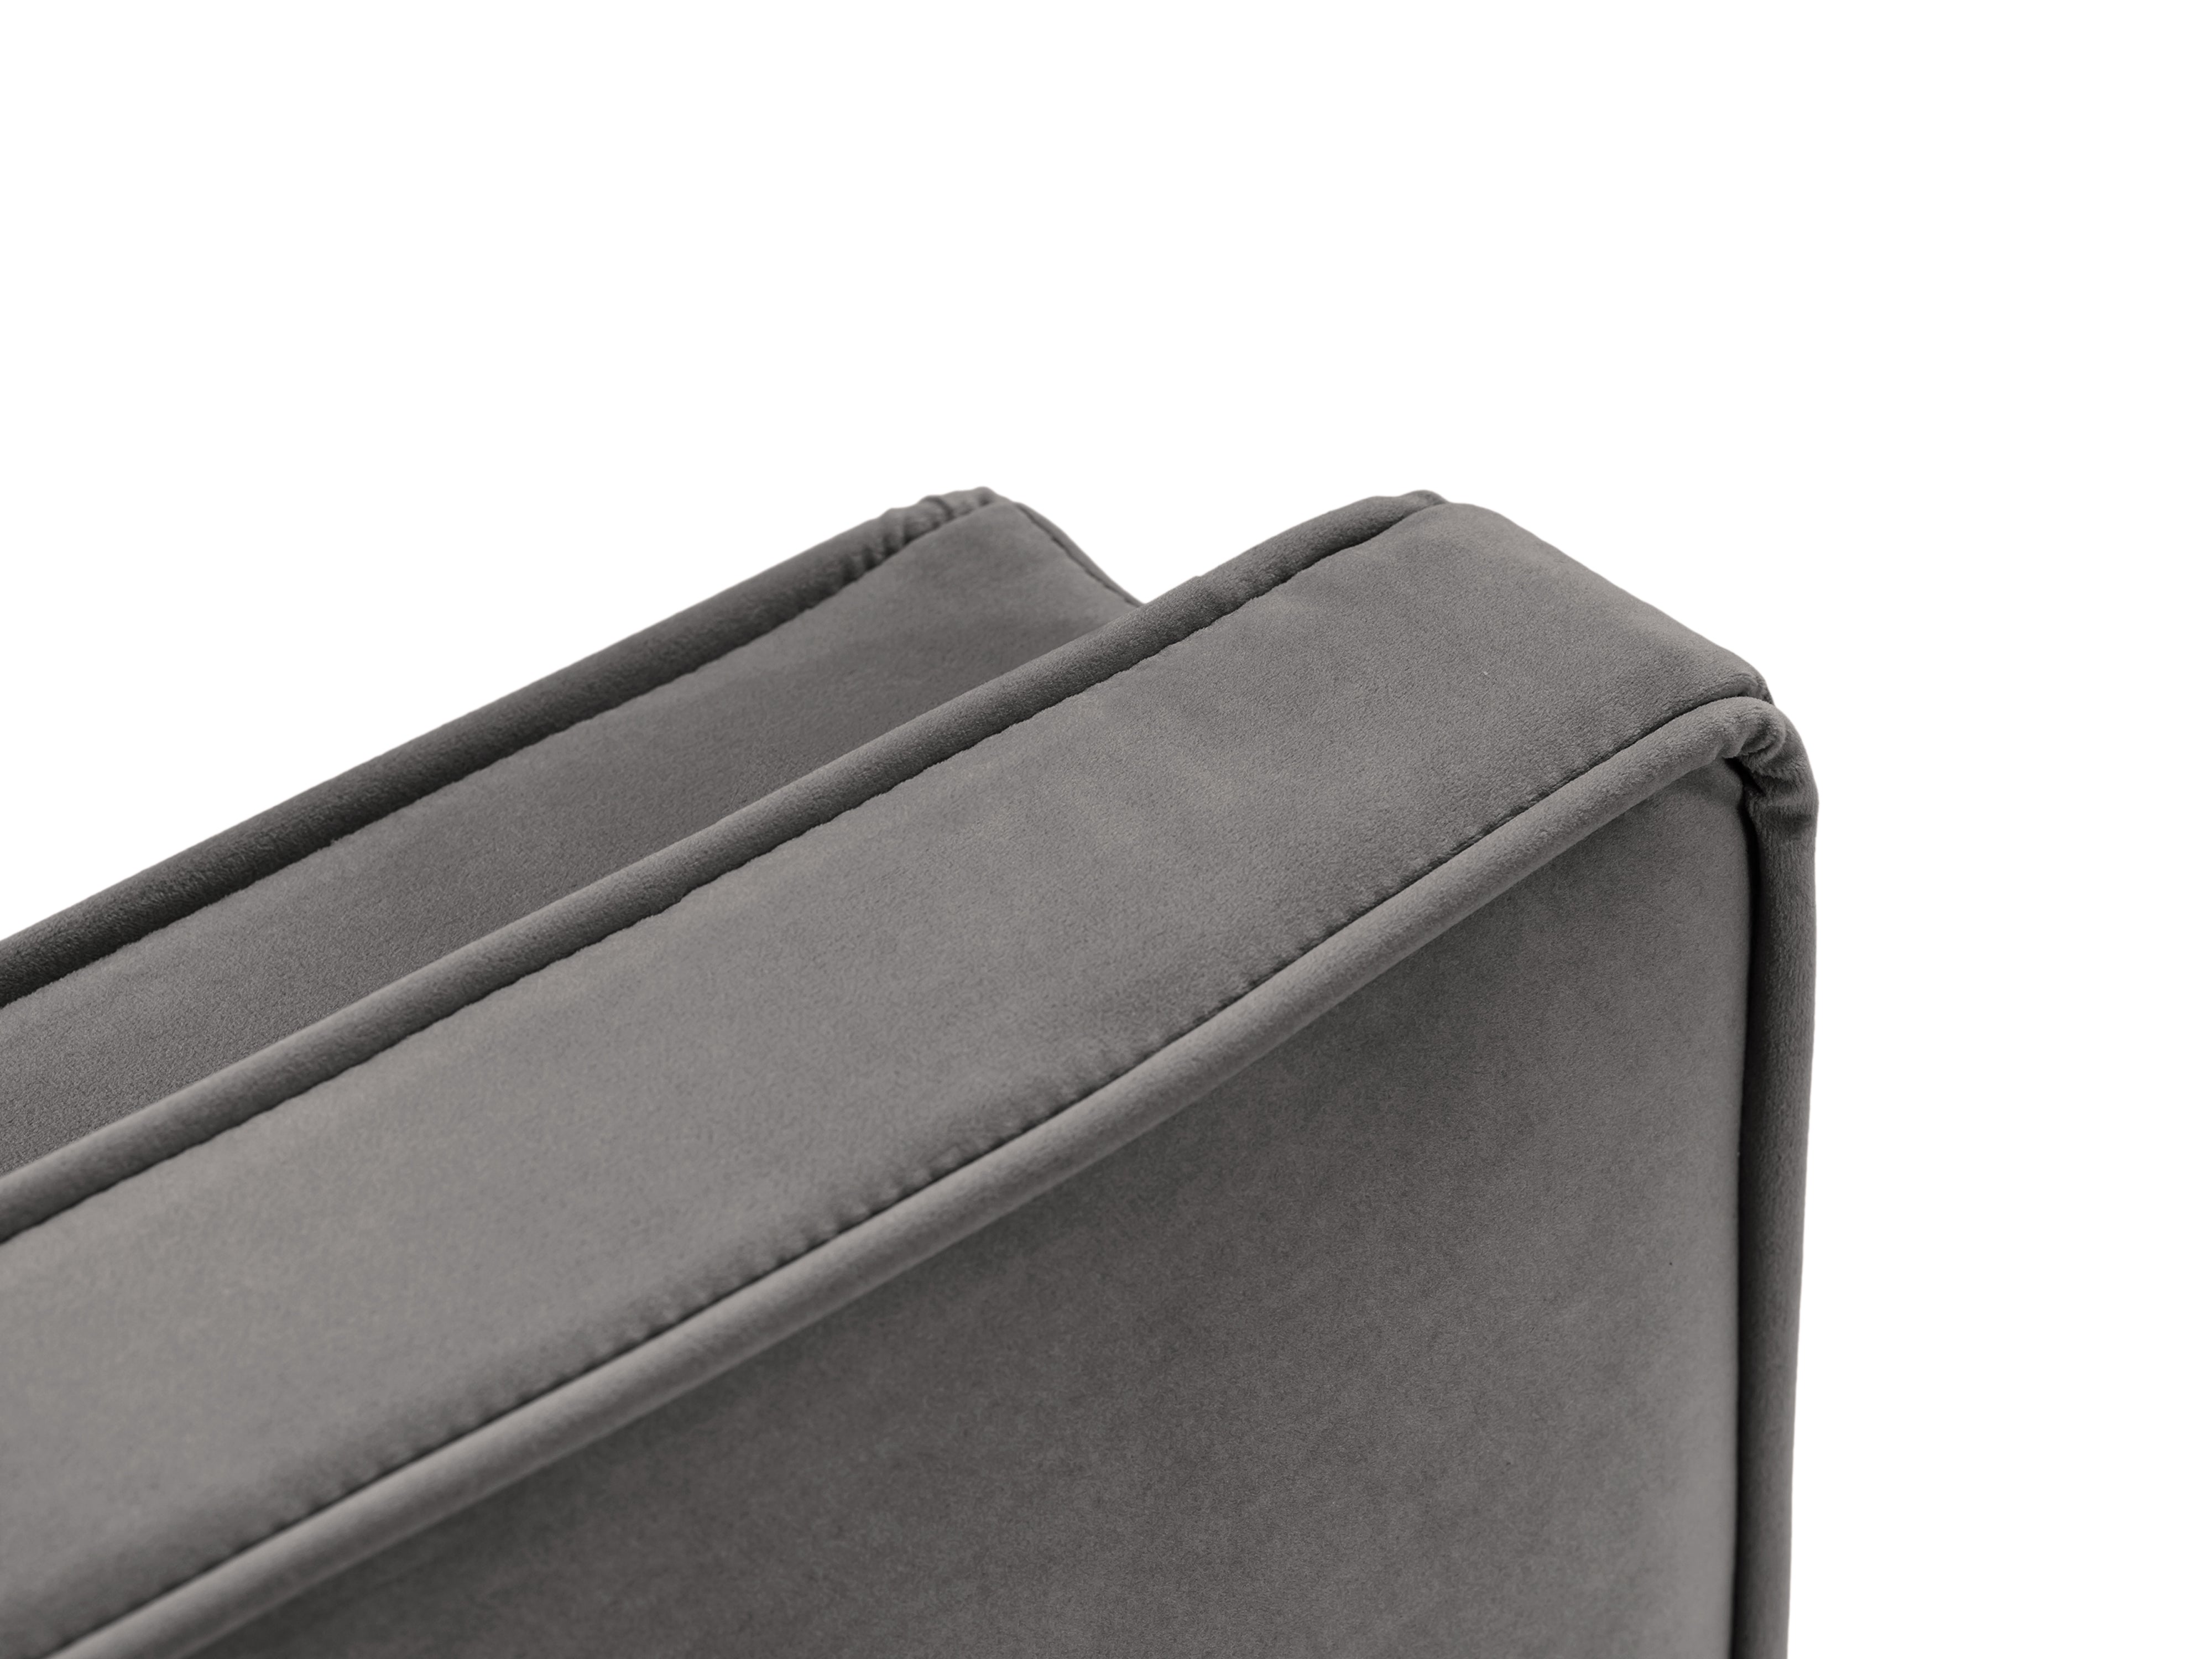 LUIS light grey velvet armchair with gold base